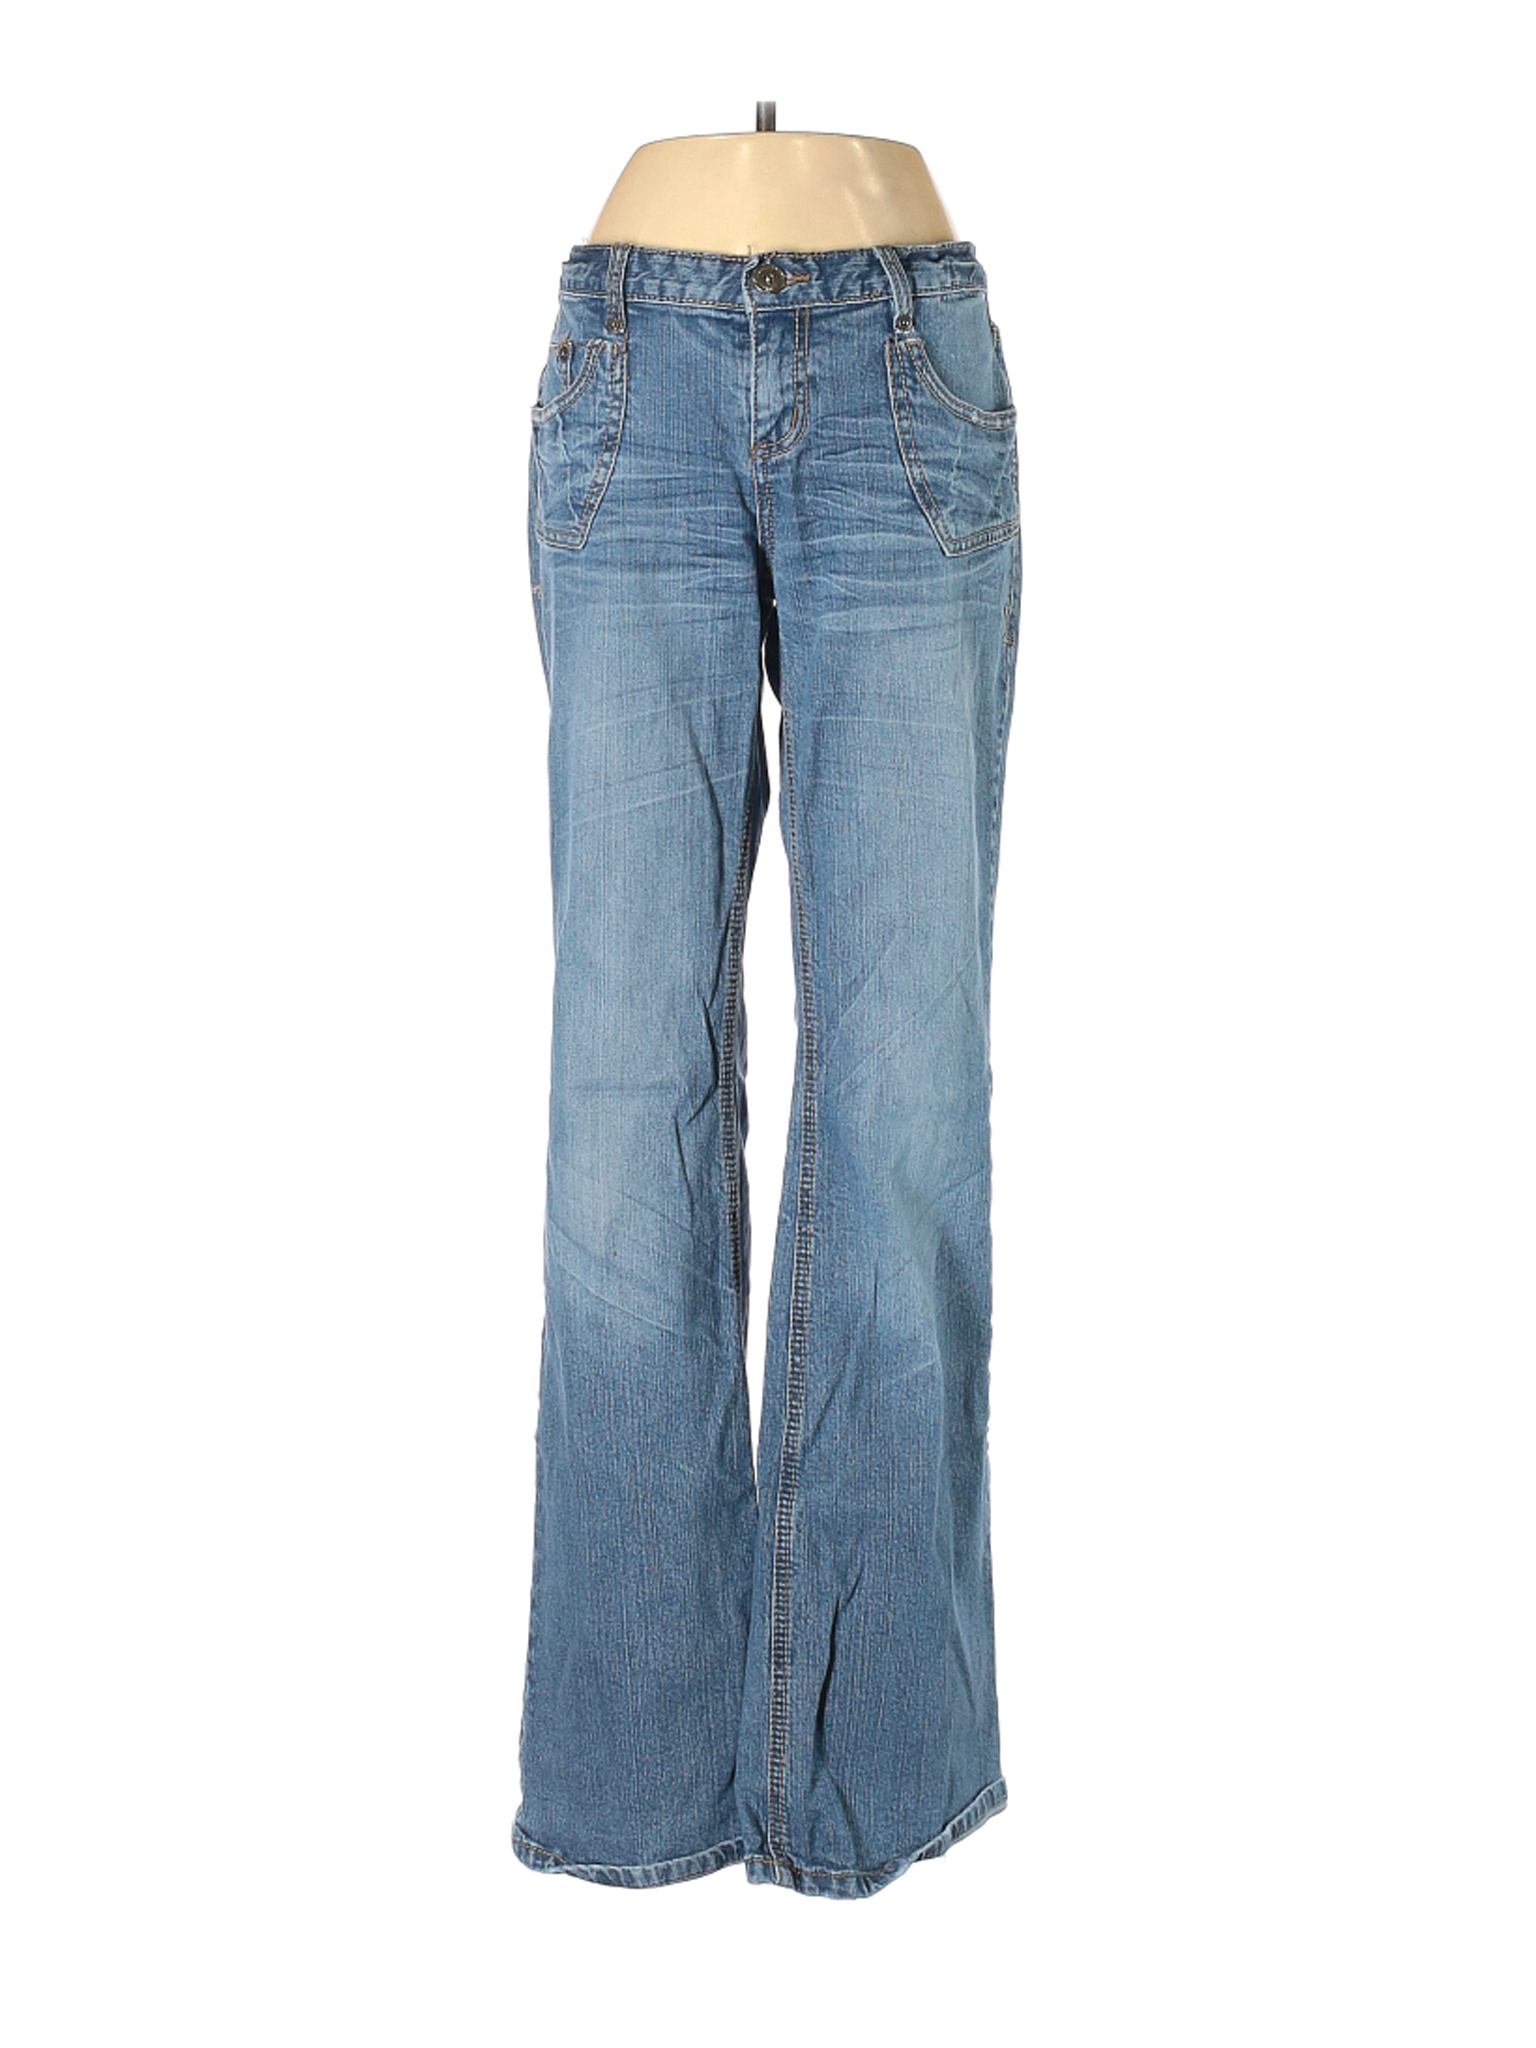 Mossimo Supply Co. Women Blue Jeans 9 | eBay